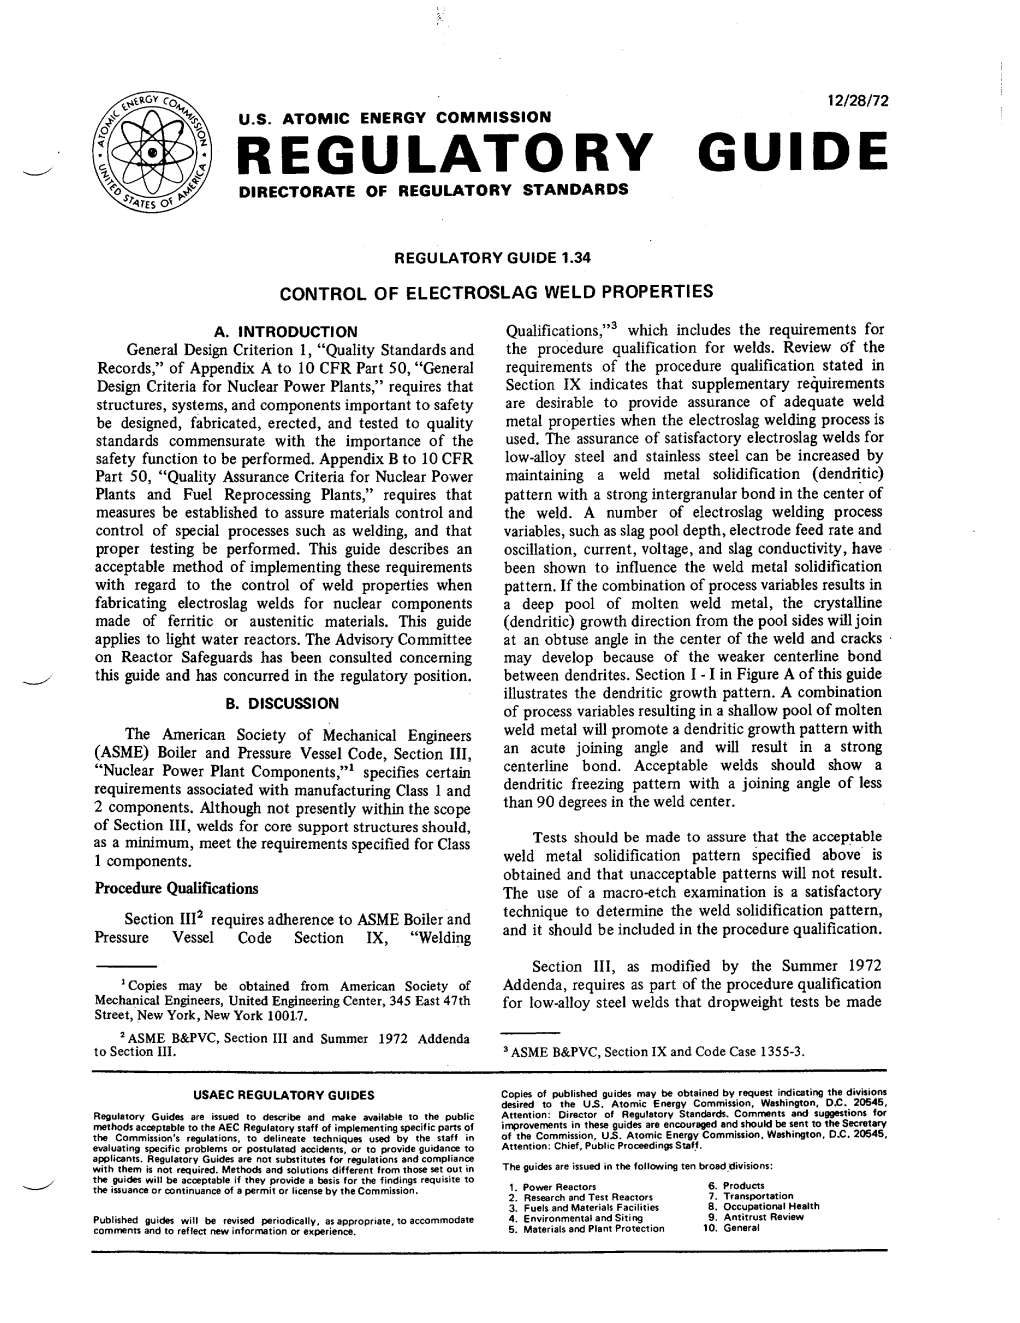 Regulatory Guide 1.34, Control of Electroslag Weld Properties